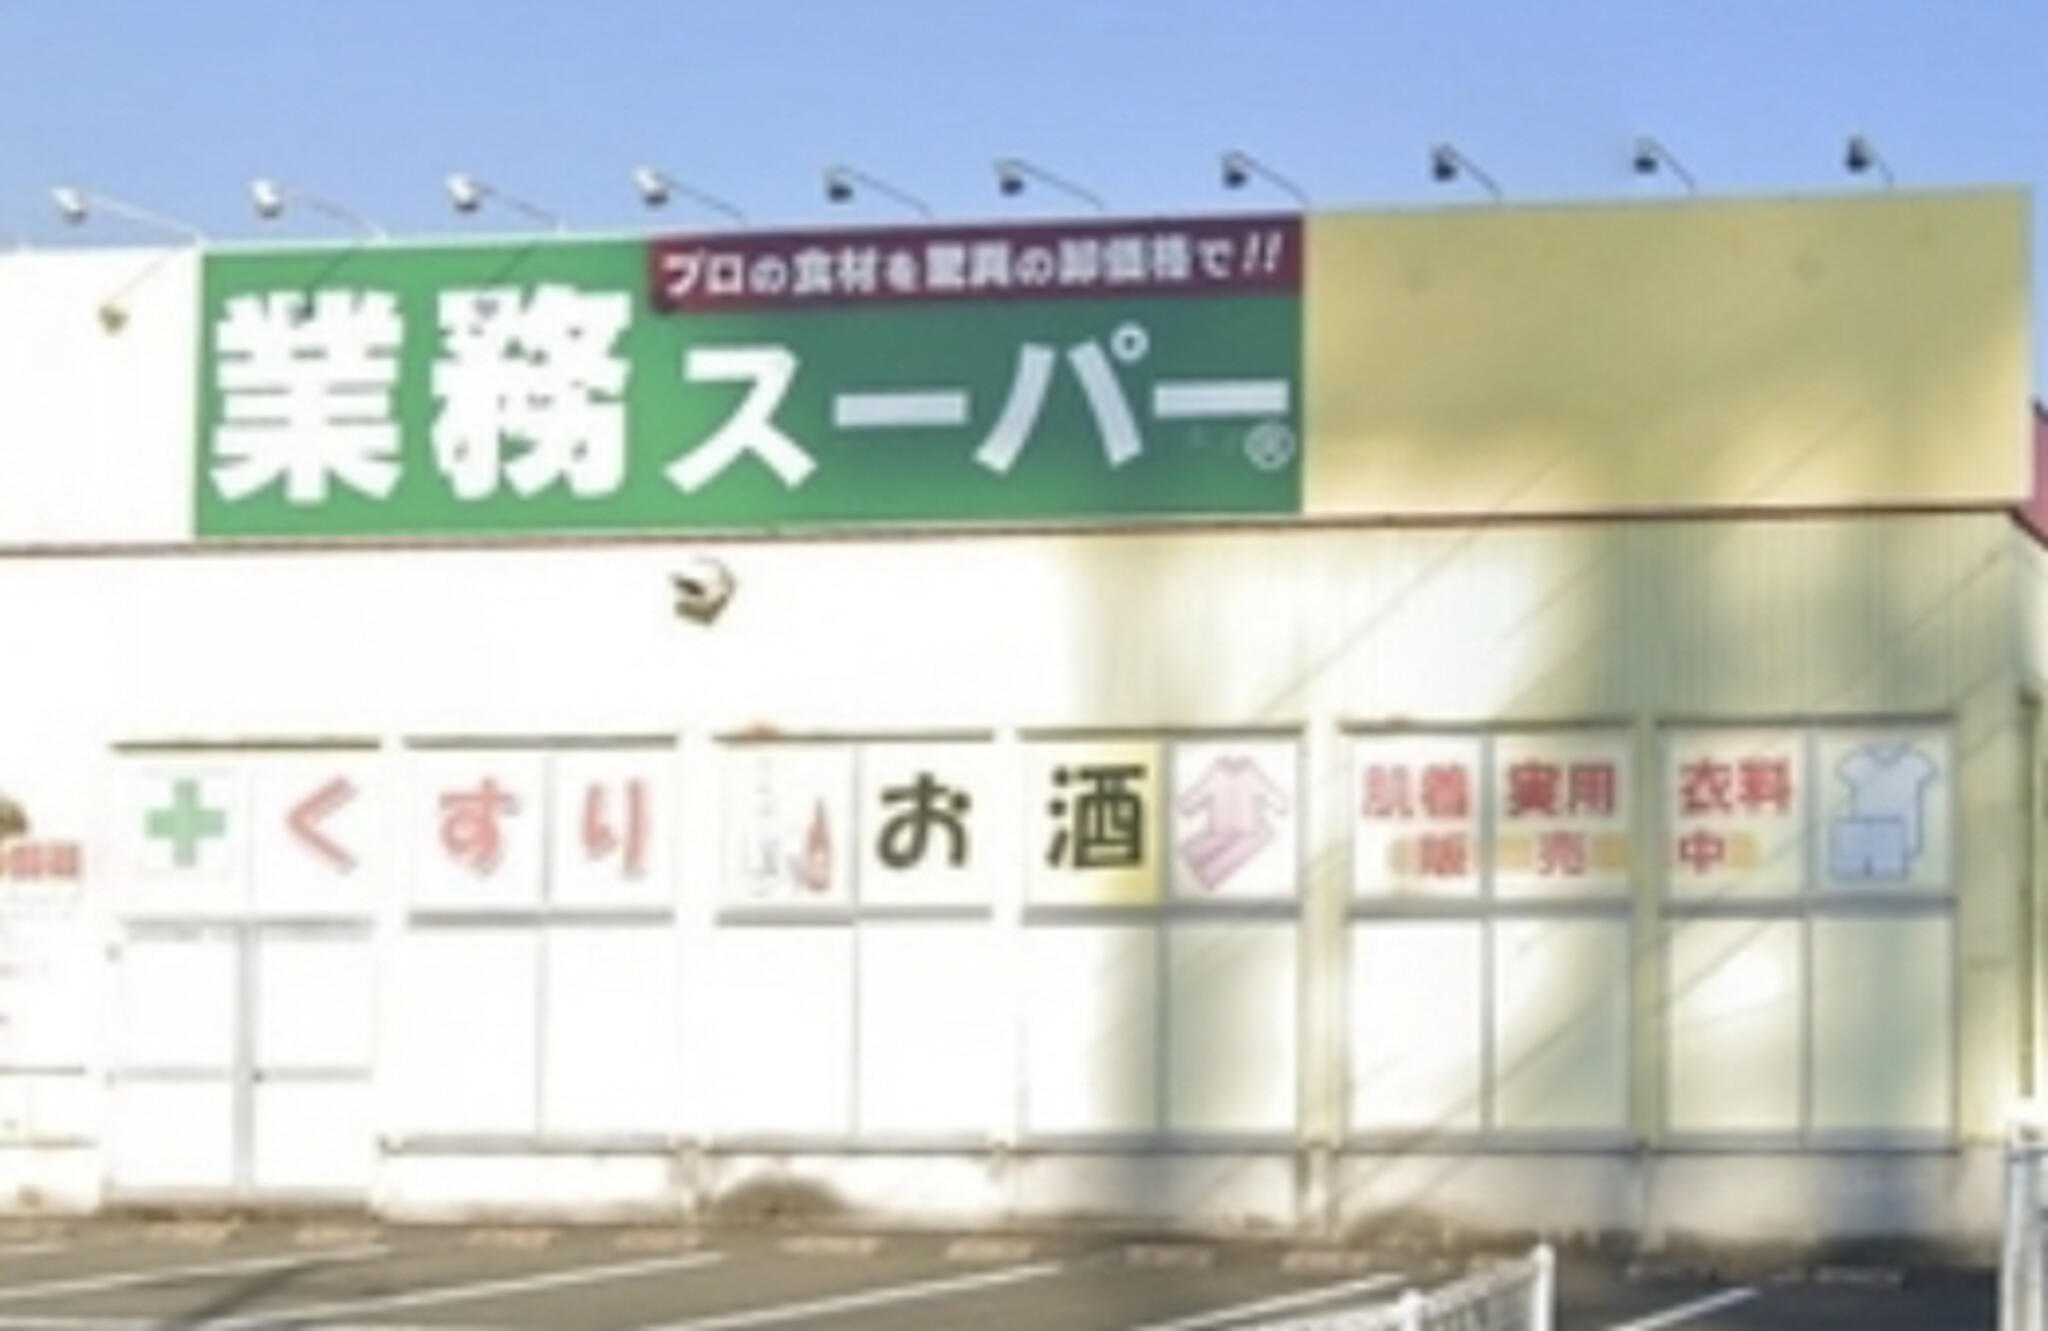 業務スーパー 鳥取駅南店の代表写真6